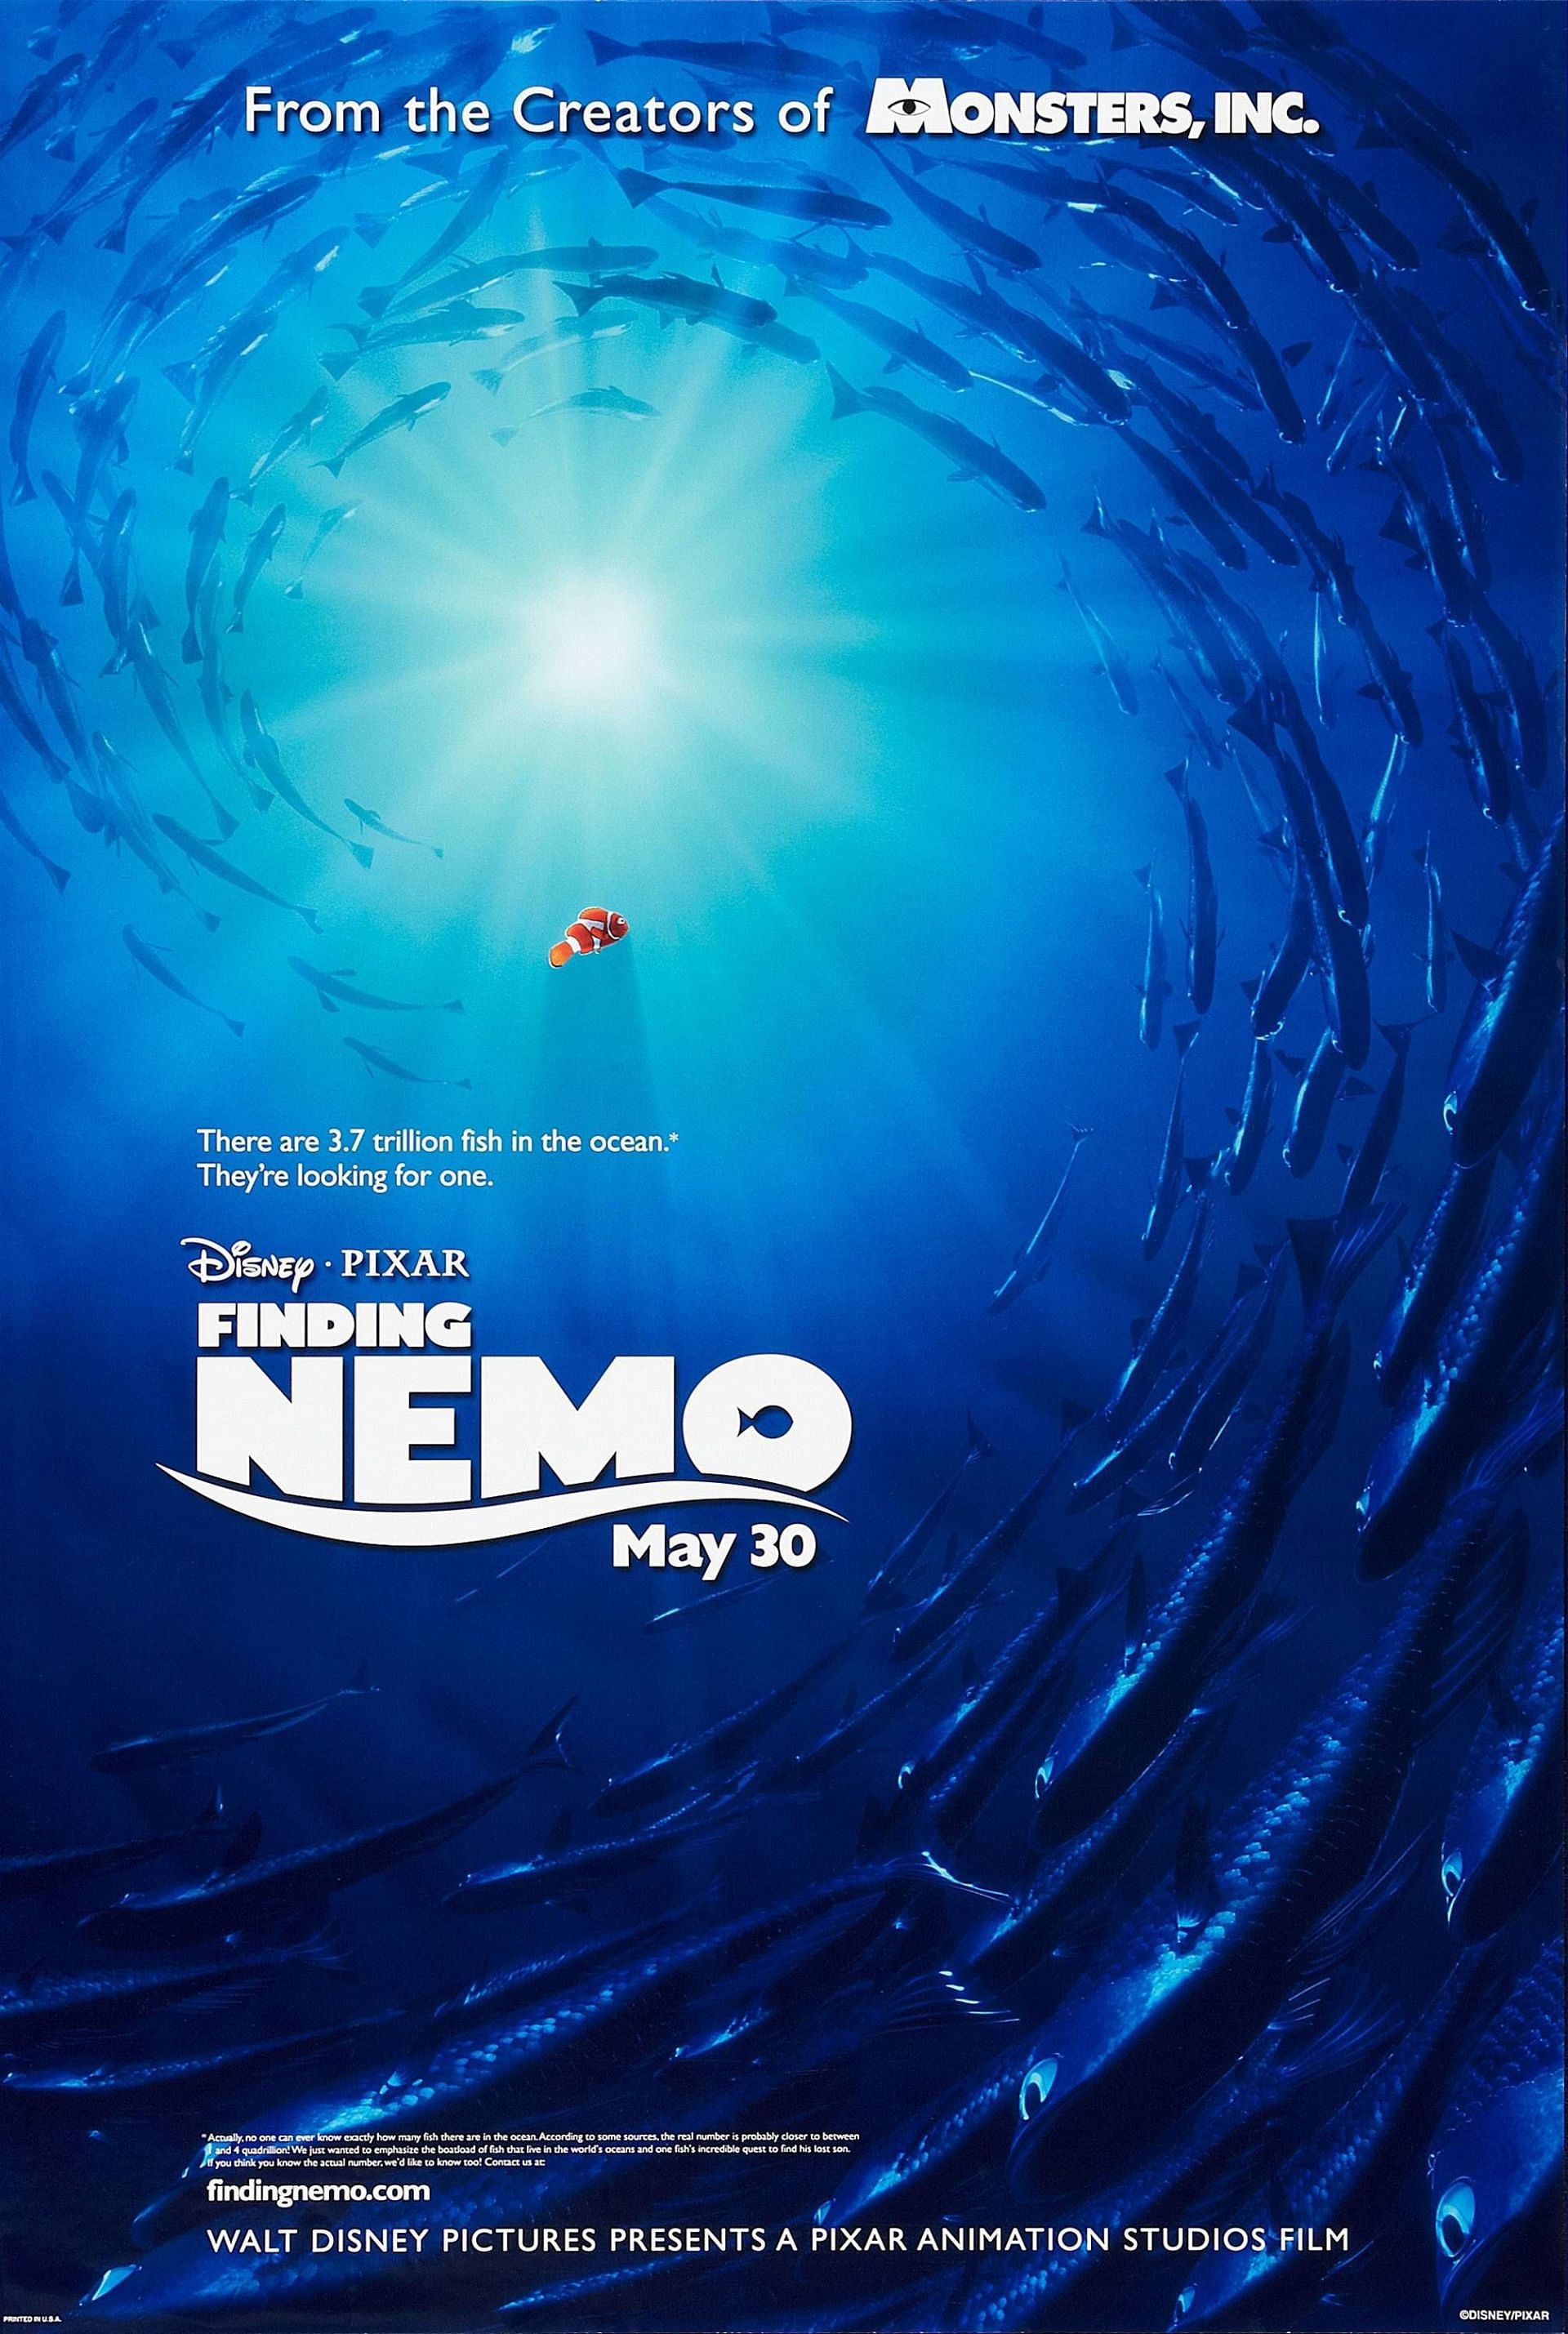 Finding Nemo, 2003 (Image via Pixar)